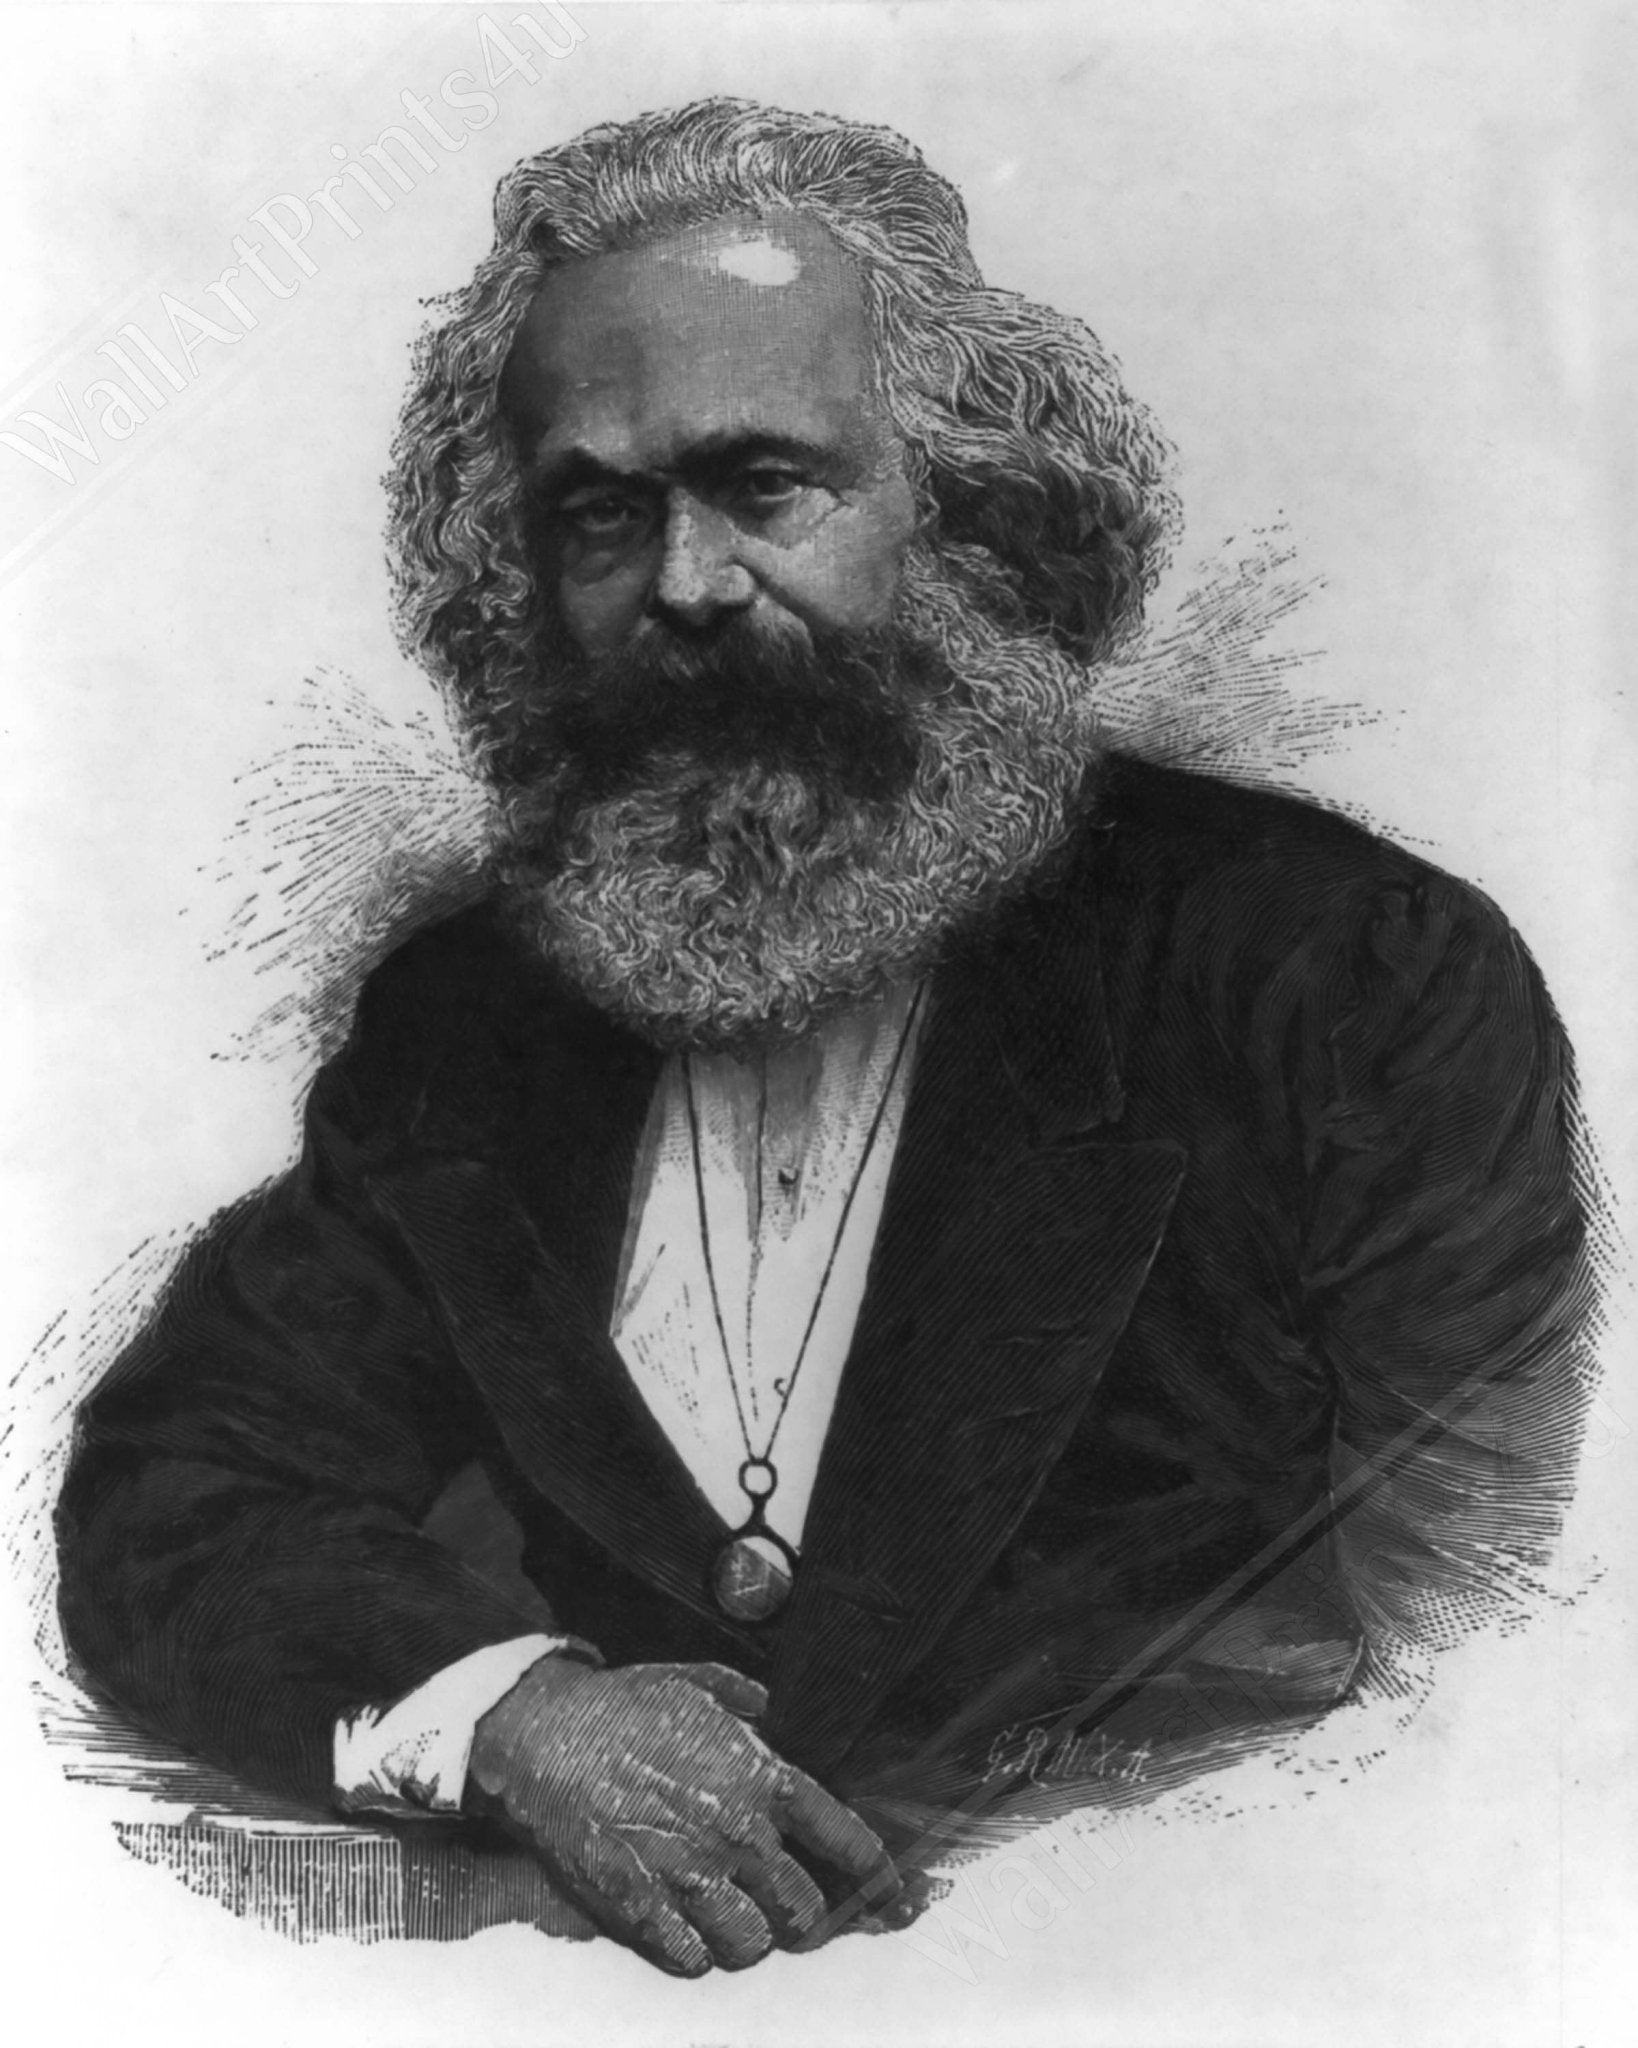 Karl Marx Poster, Socialist Revolutionary, Vintage Photo - Iconic Karl Marx Print - Marxist Politics Philosophy - WallArtPrints4U